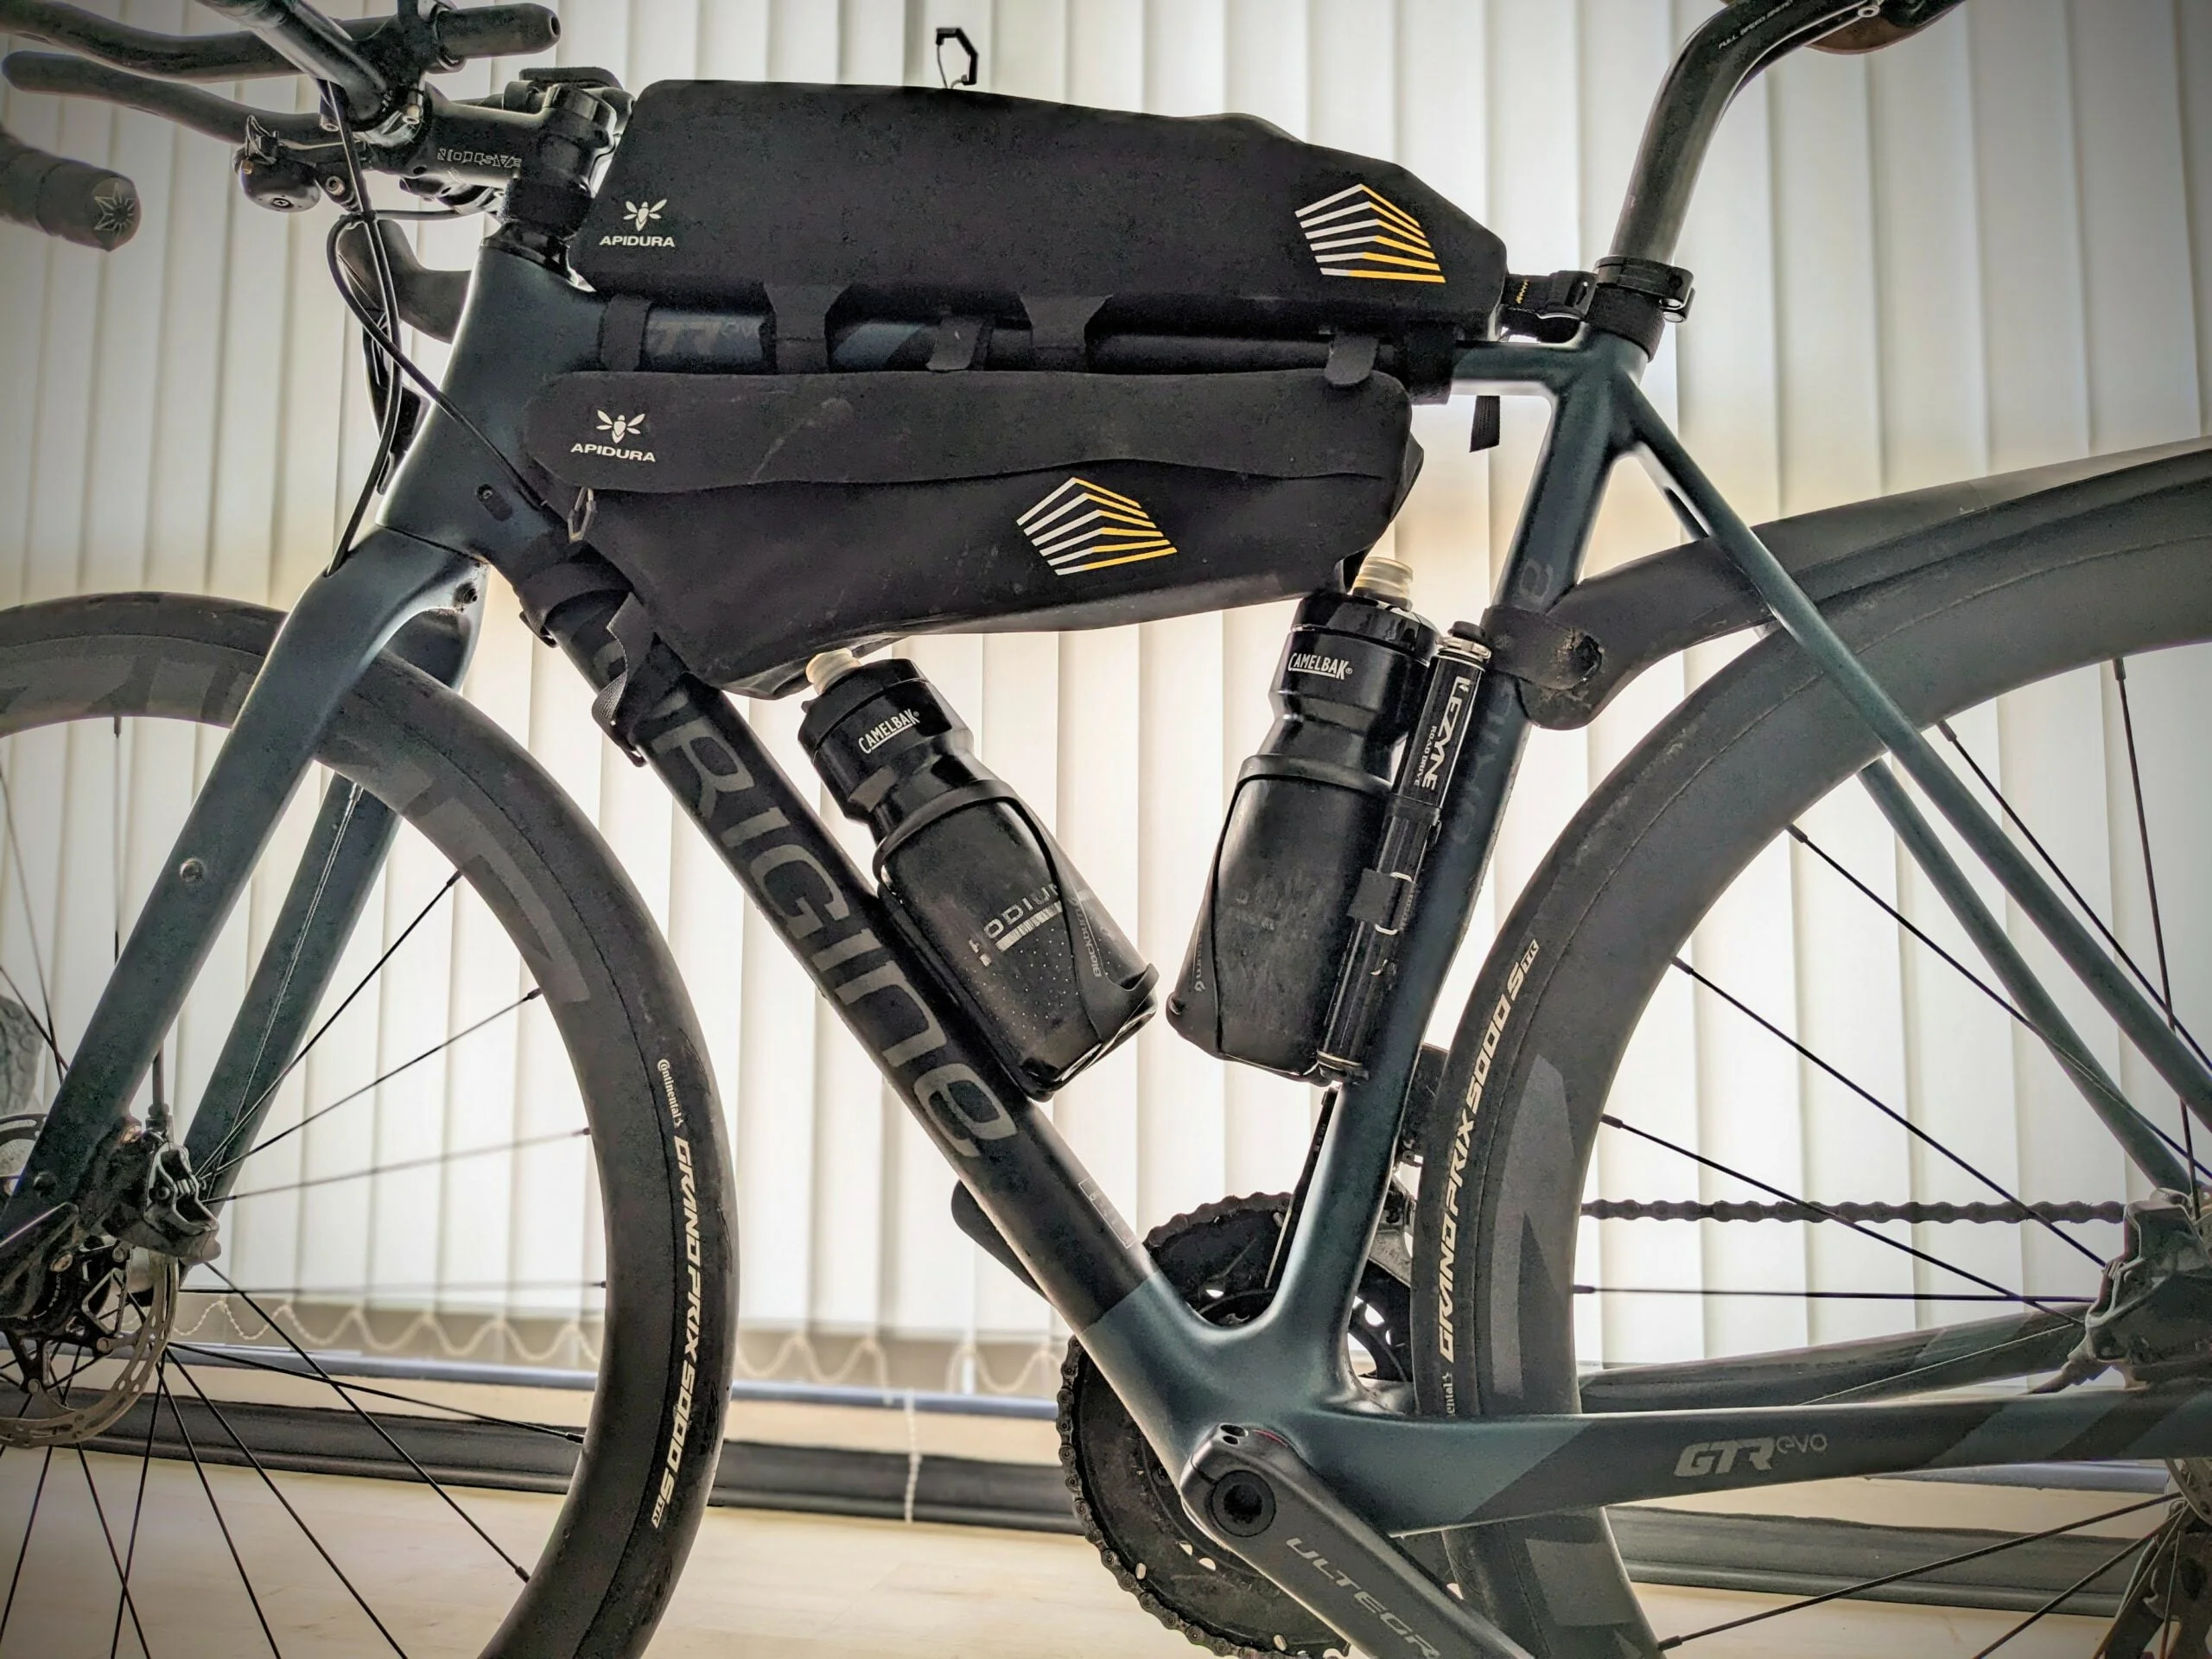 Porte-bidon bikepacking : 5 modèles compatibles sacoches !